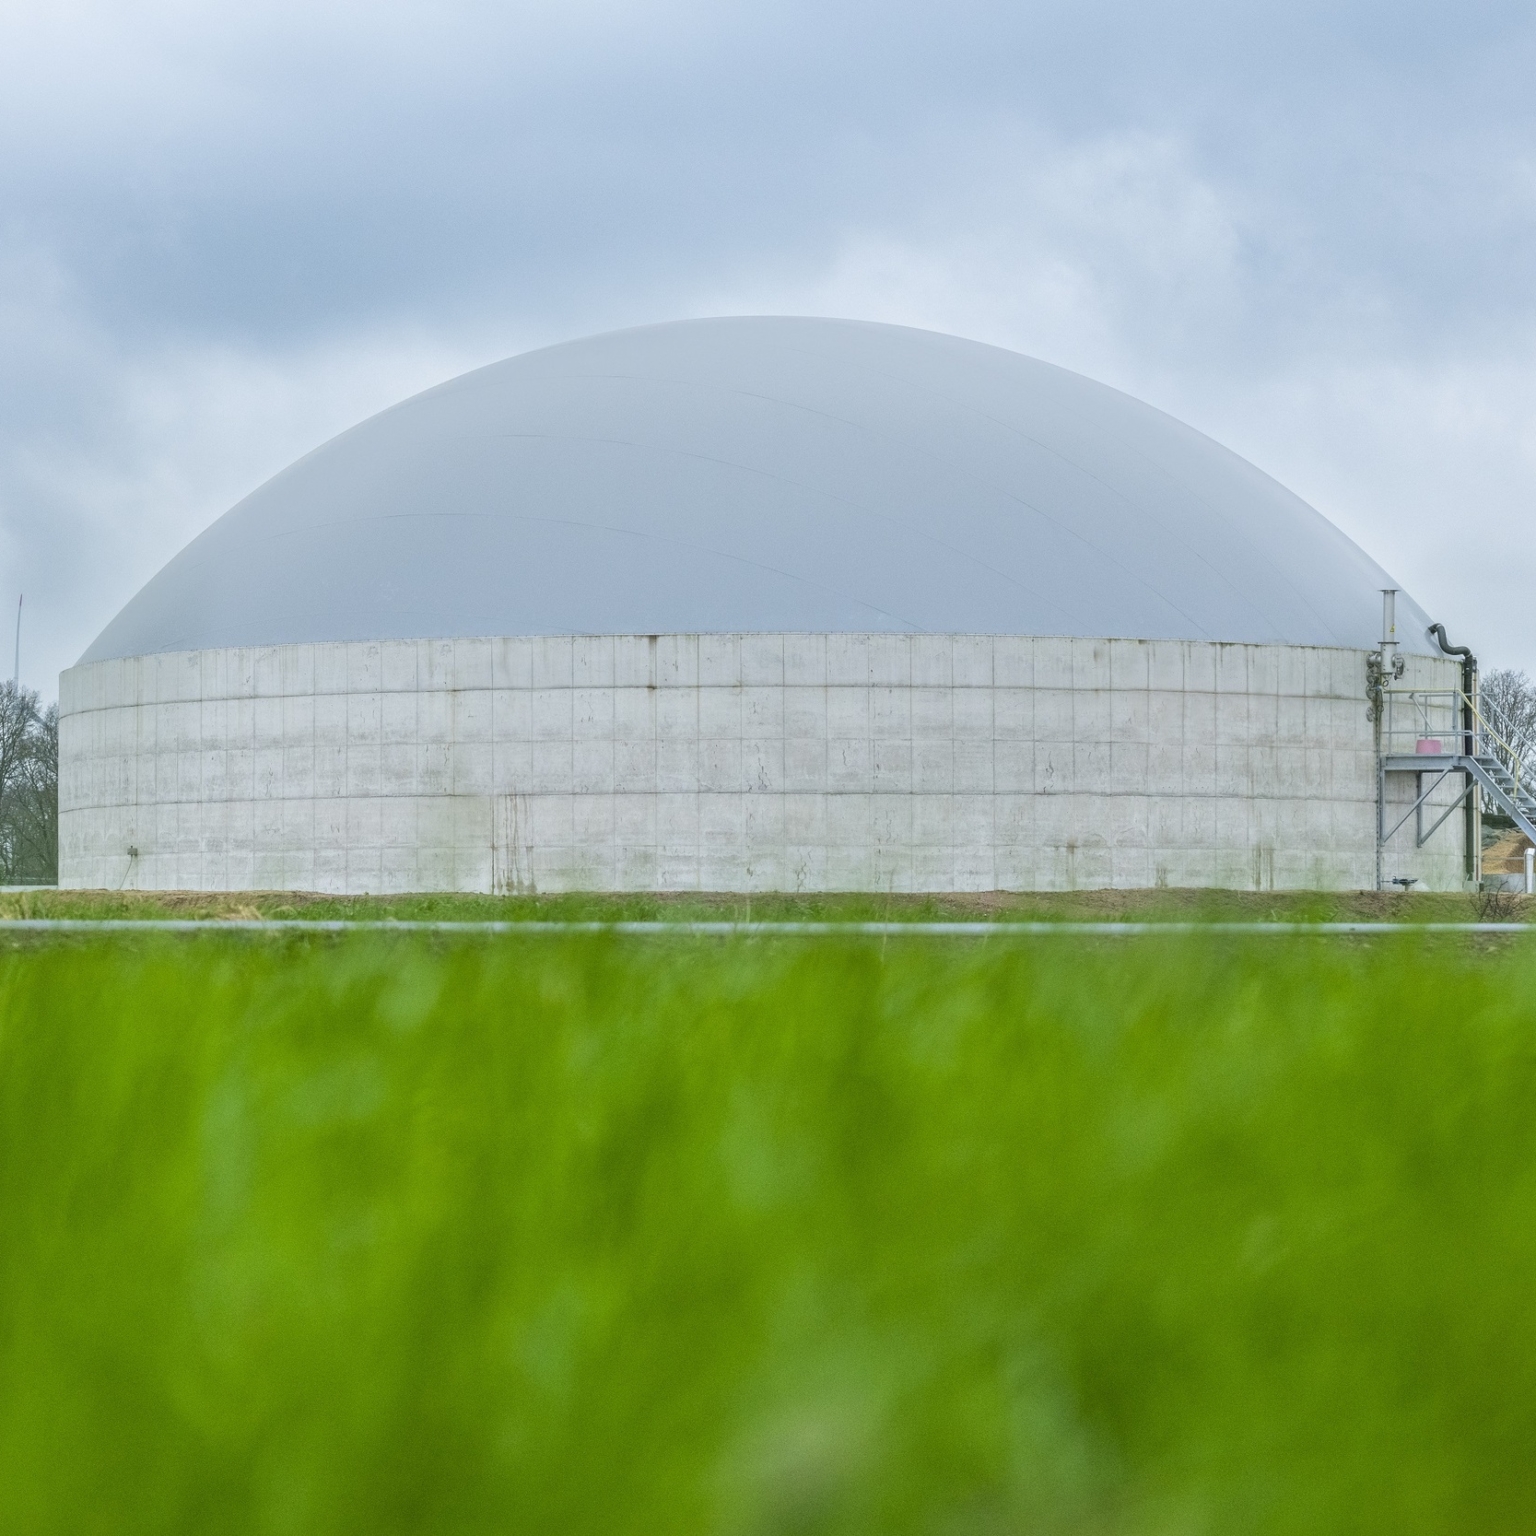 Double-layer biogas cover on a concrete silo